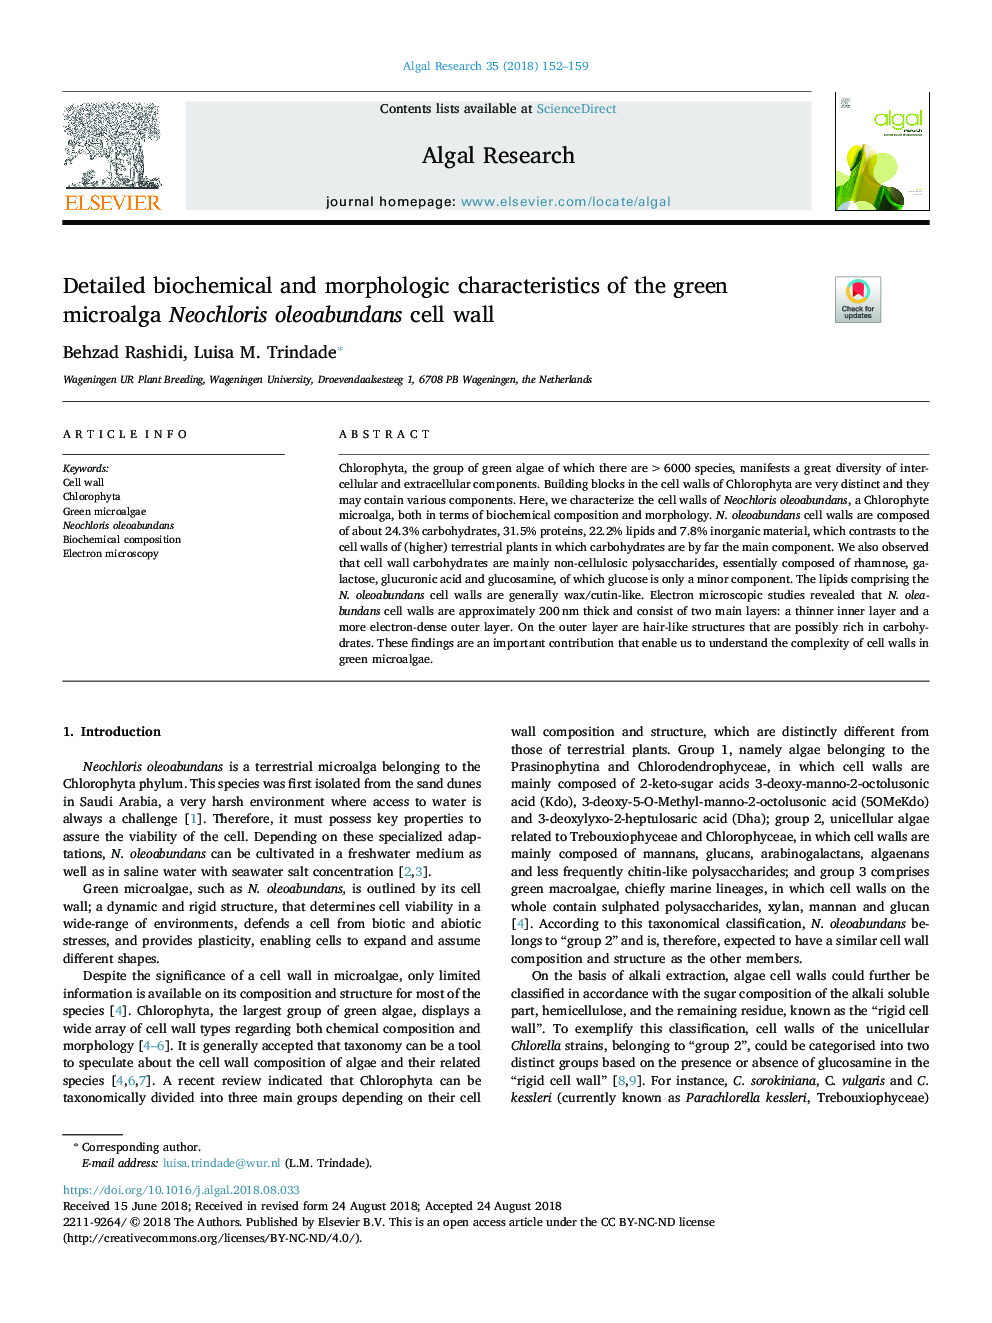 Detailed biochemical and morphologic characteristics of the green microalga Neochloris oleoabundans cell wall